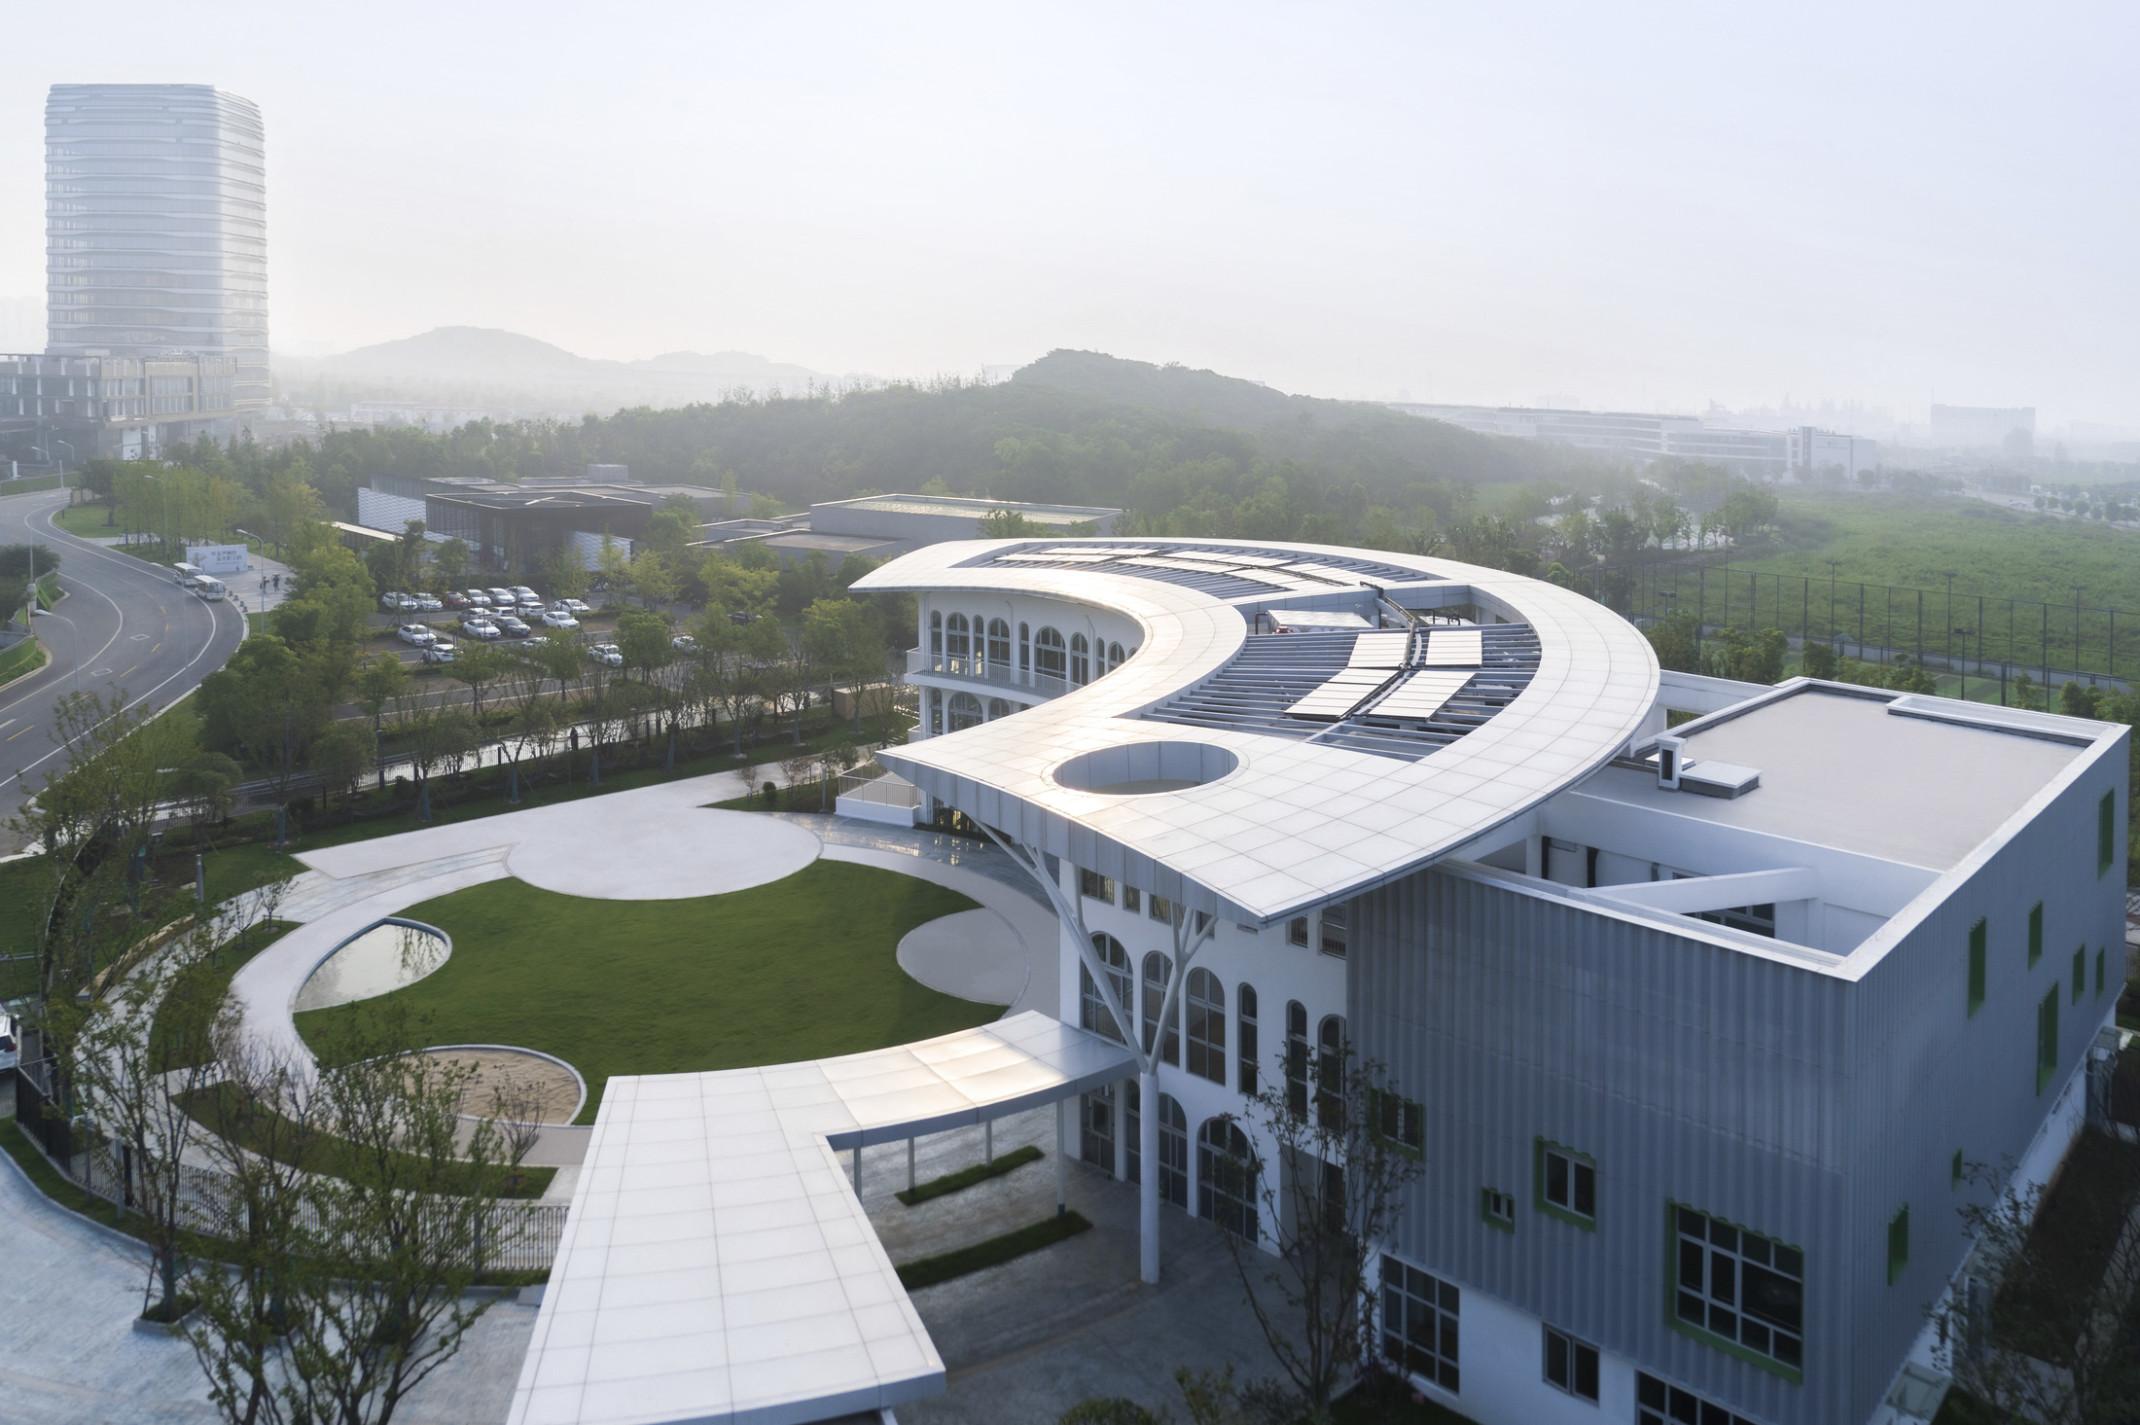 Suzhou Greenshore LOT 16 Kindergarten, a white 3 story building with semi circular canopy and front facade facing green lawn